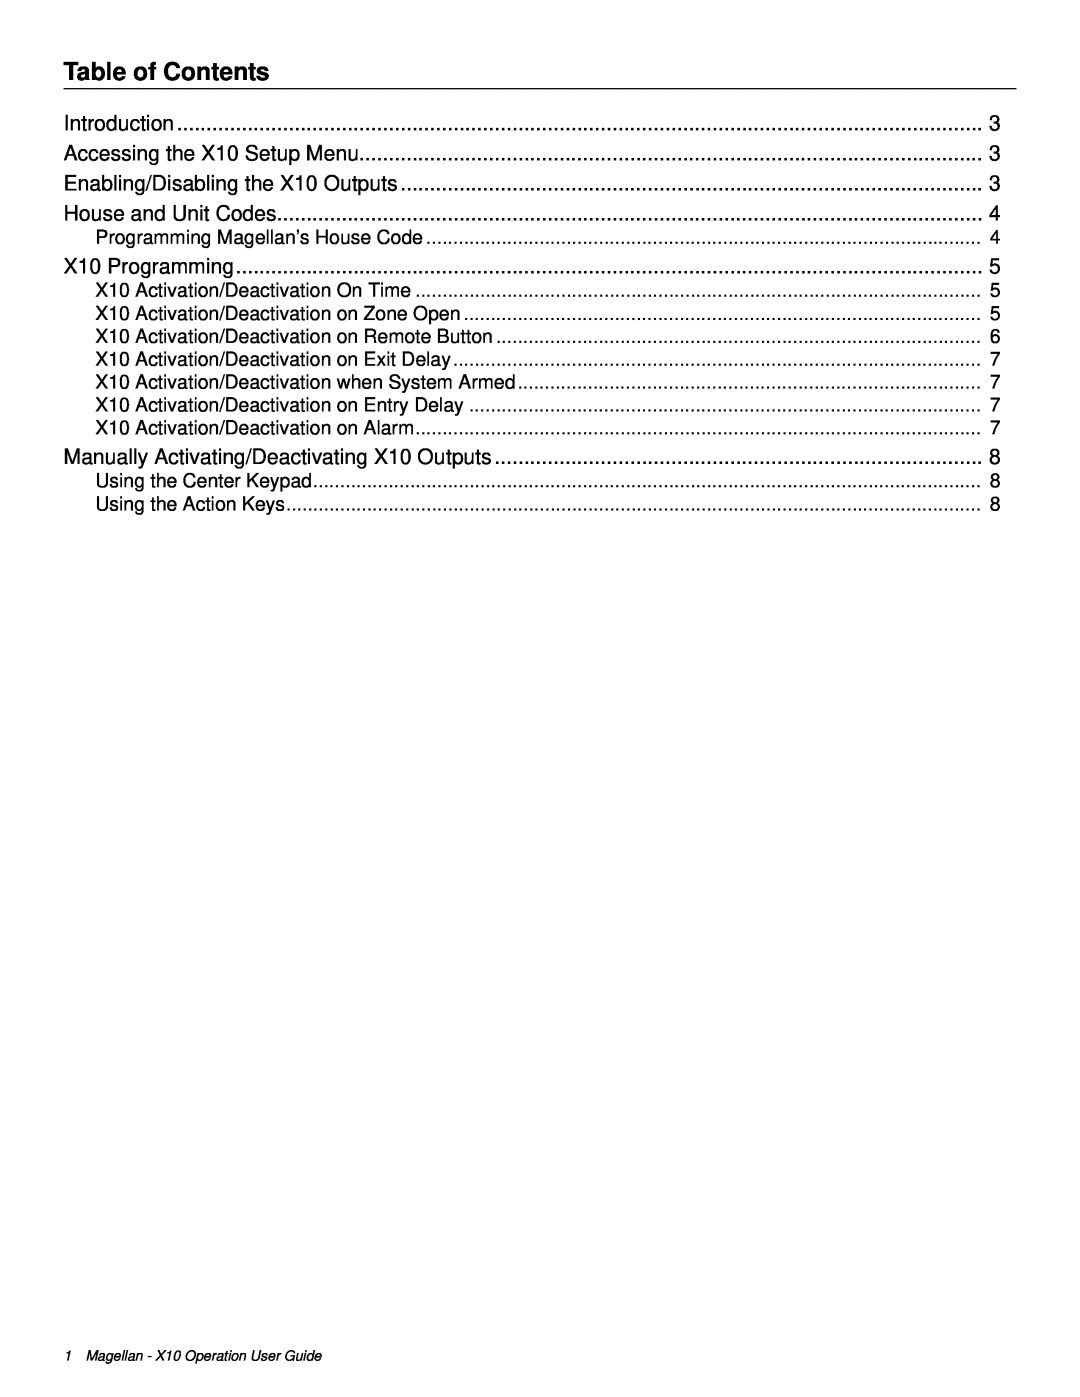 Magellan MG-6160 manual Table of Contents 